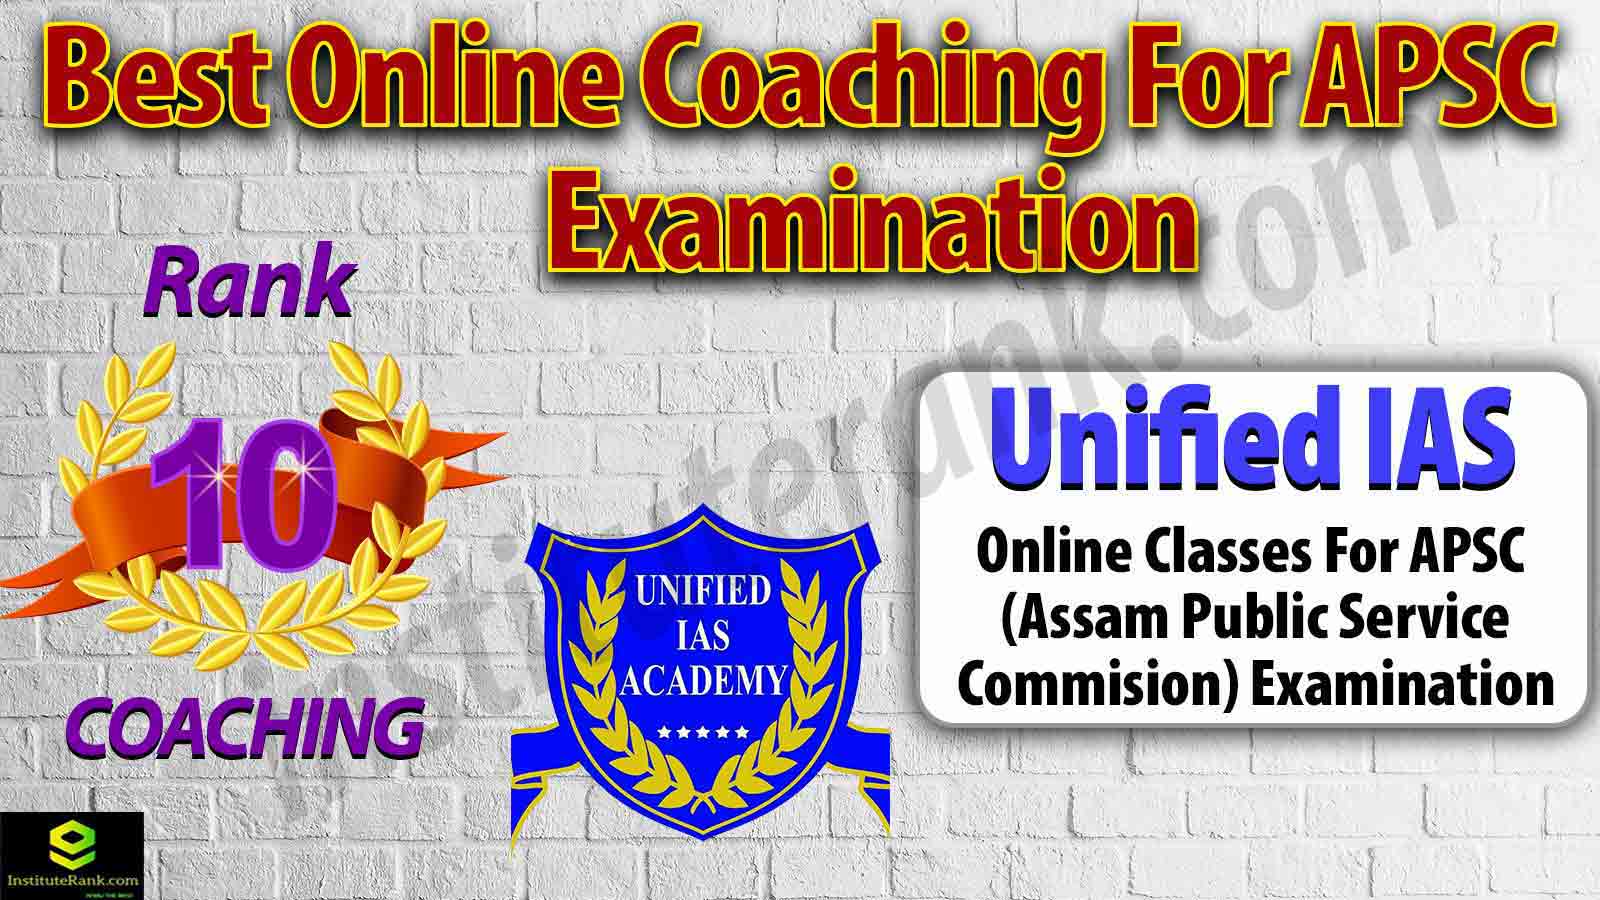 Top Online Coaching for APSC Preparation